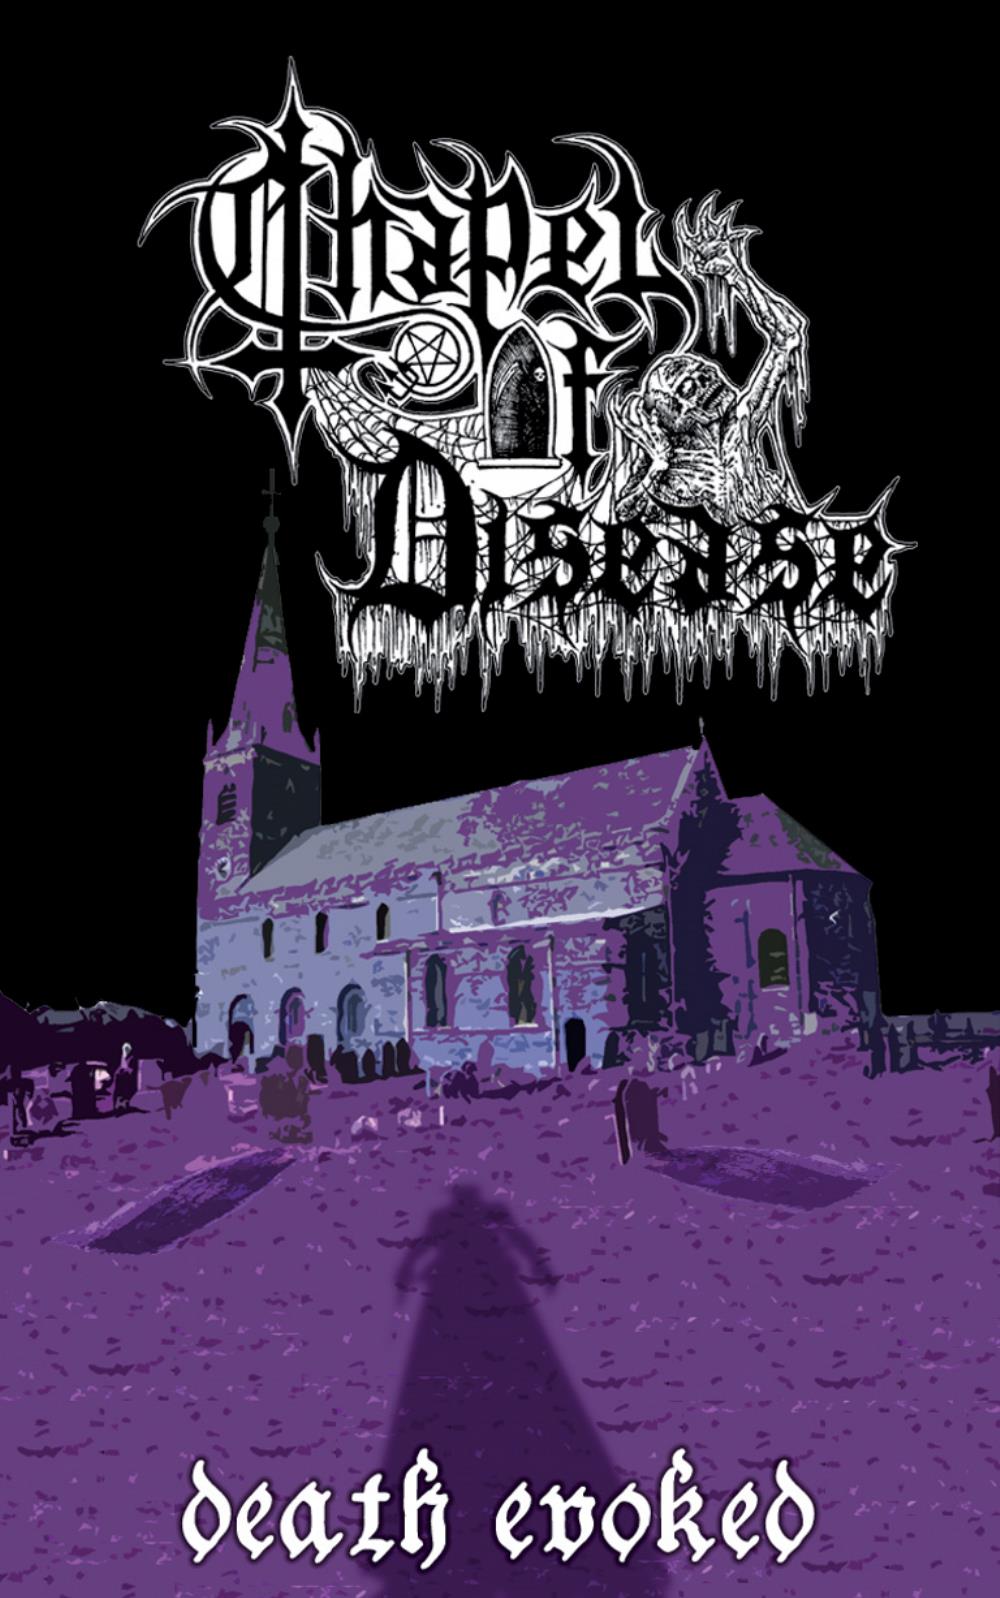 Chapel Of Disease Death Evoked album cover